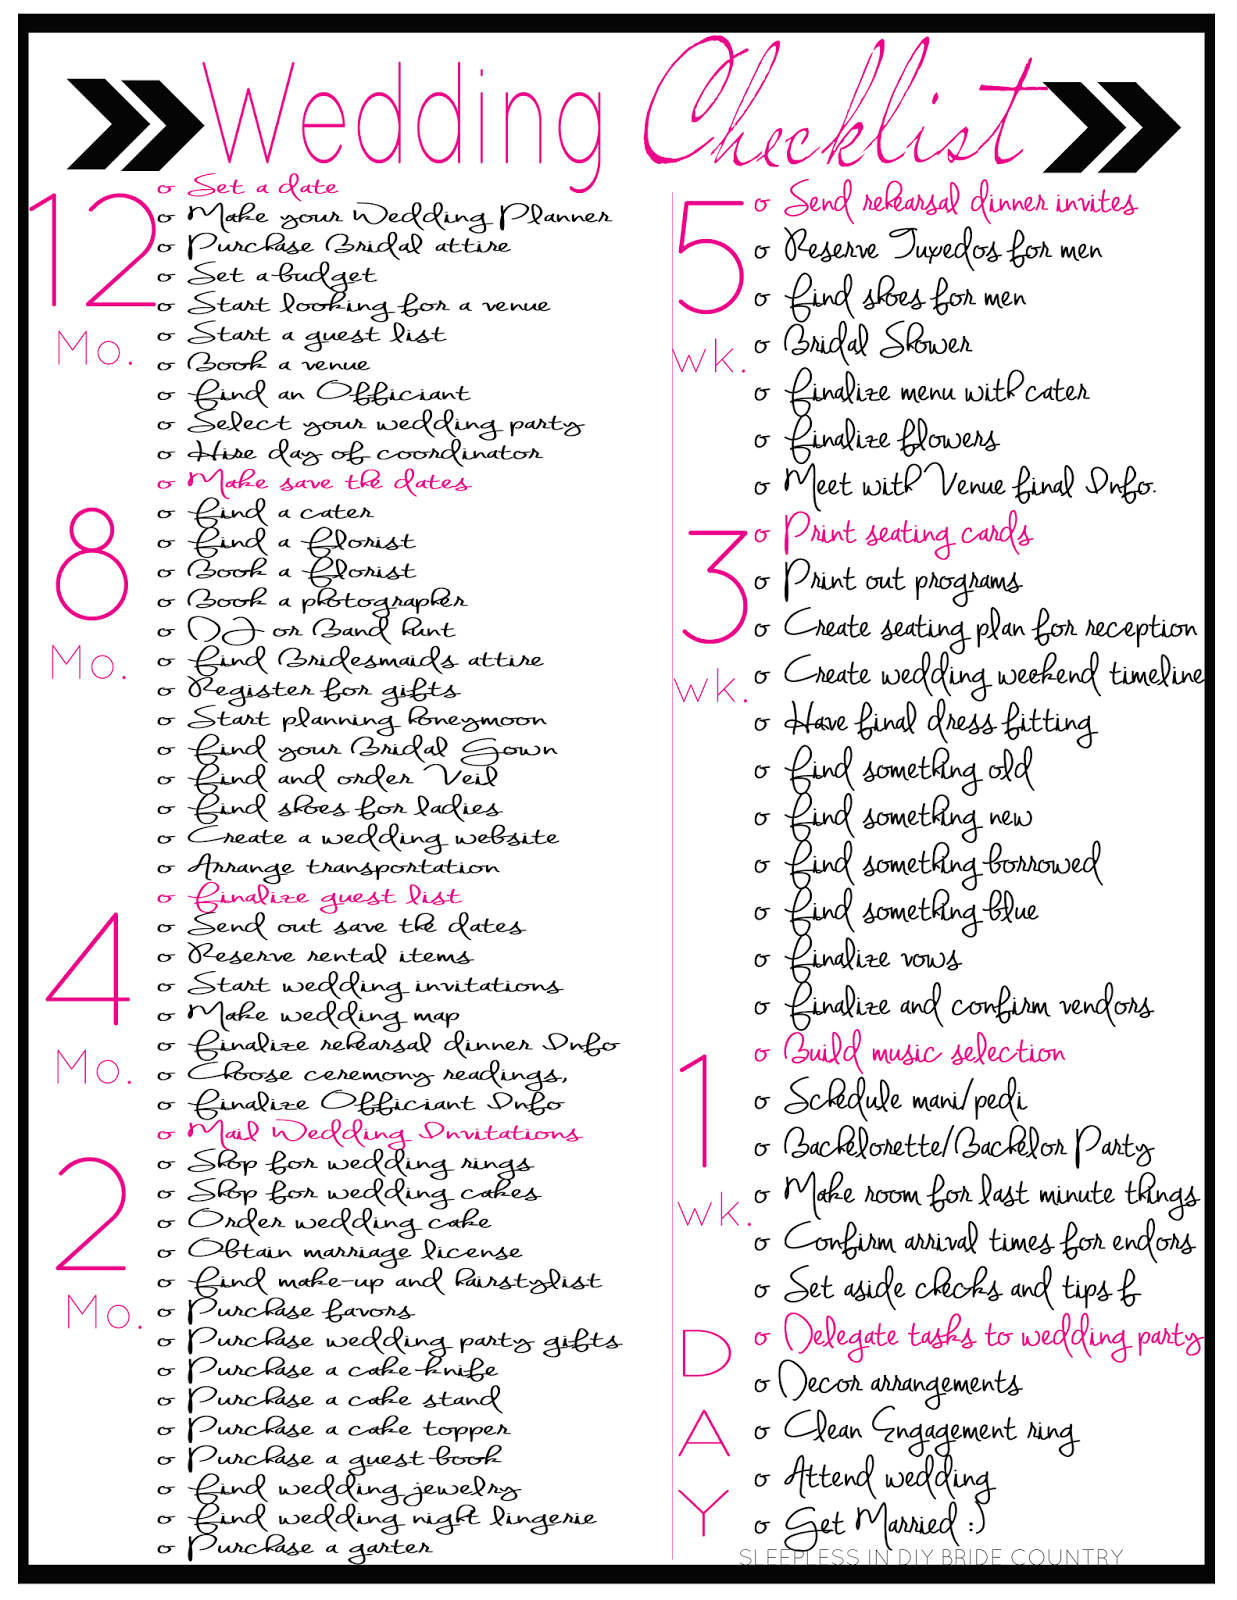 printable wedding timeline checklist | [#] Lunawsome